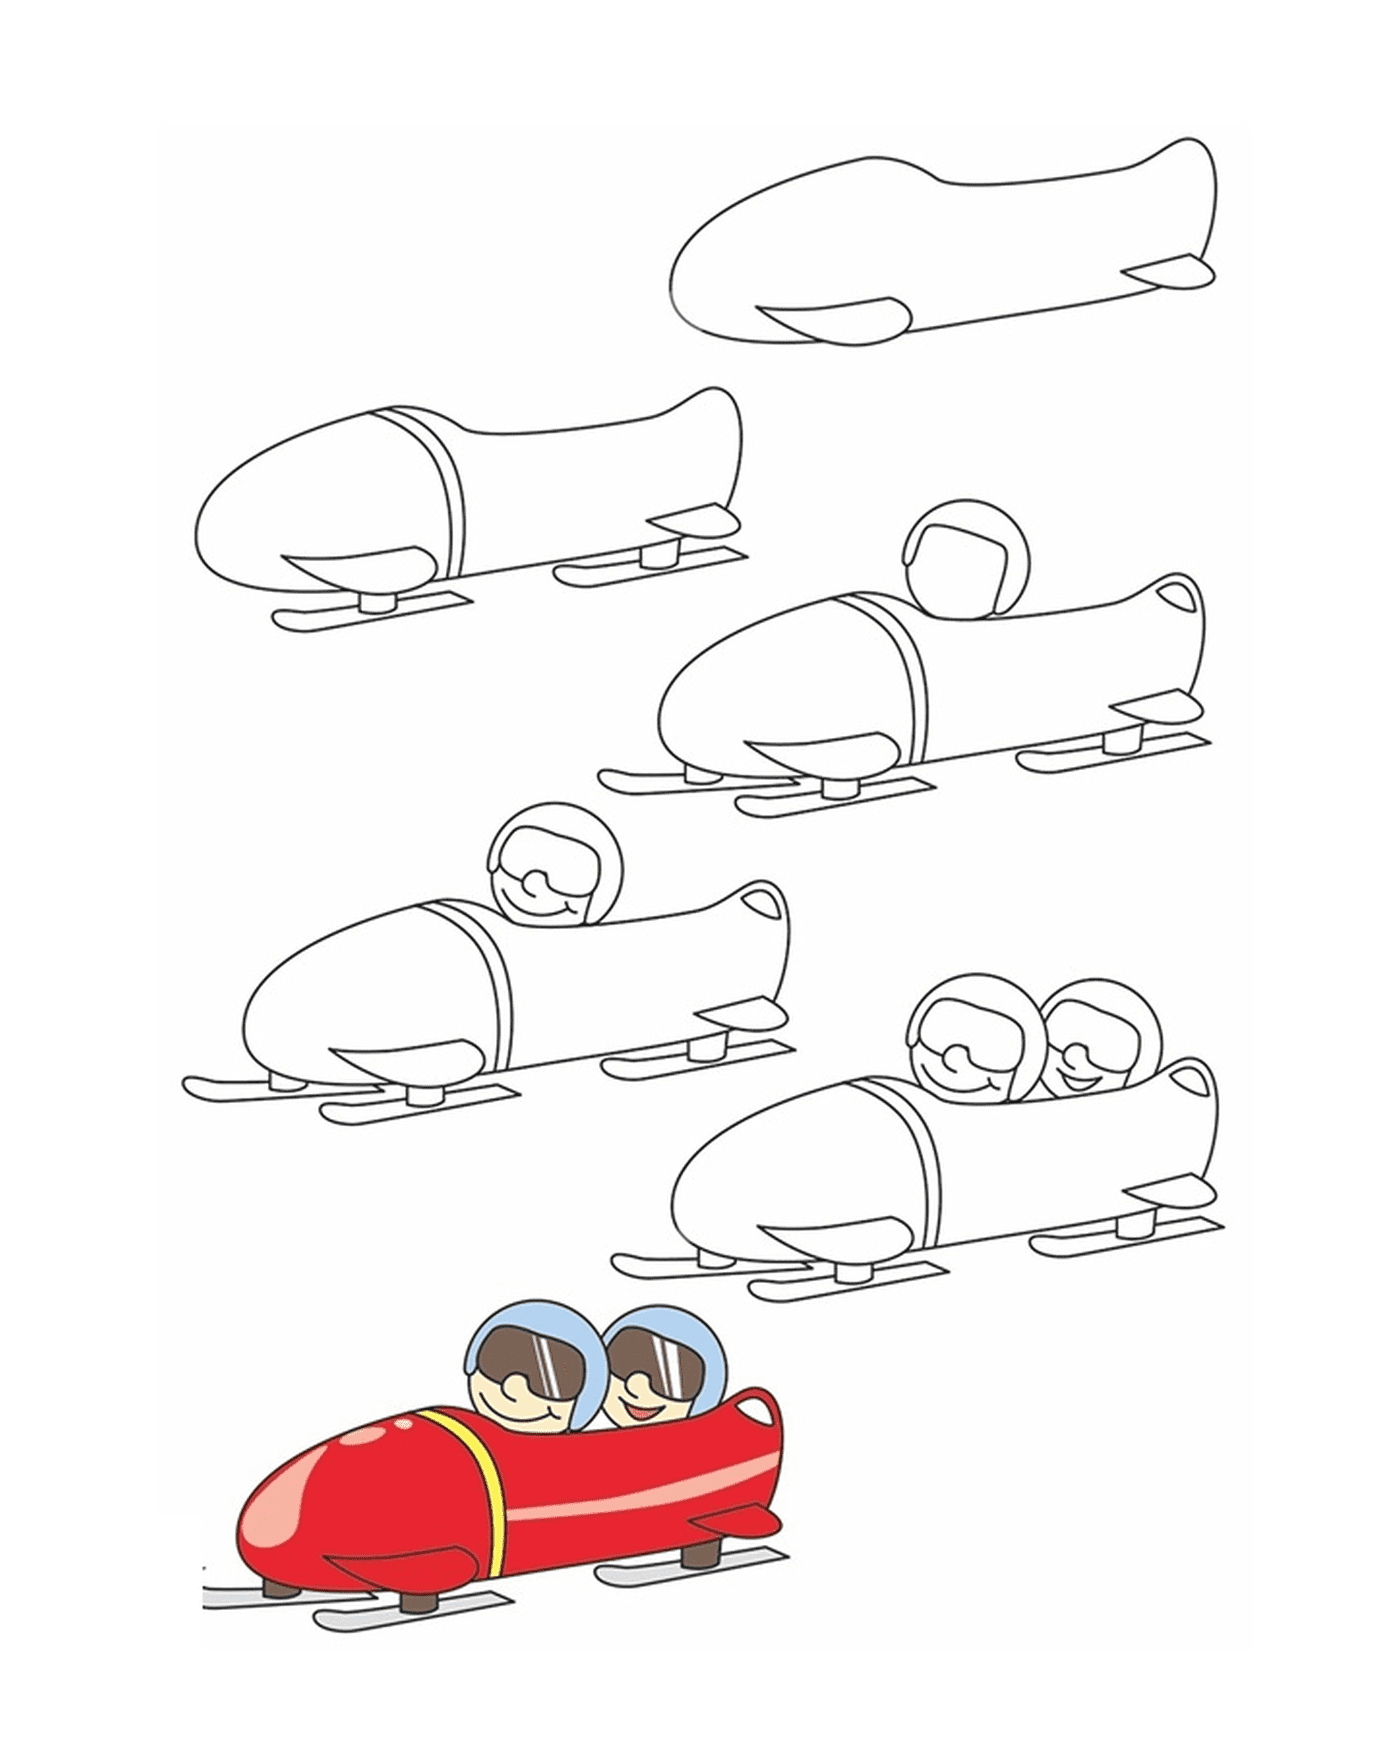  Cómo dibujar un bobsleigh 